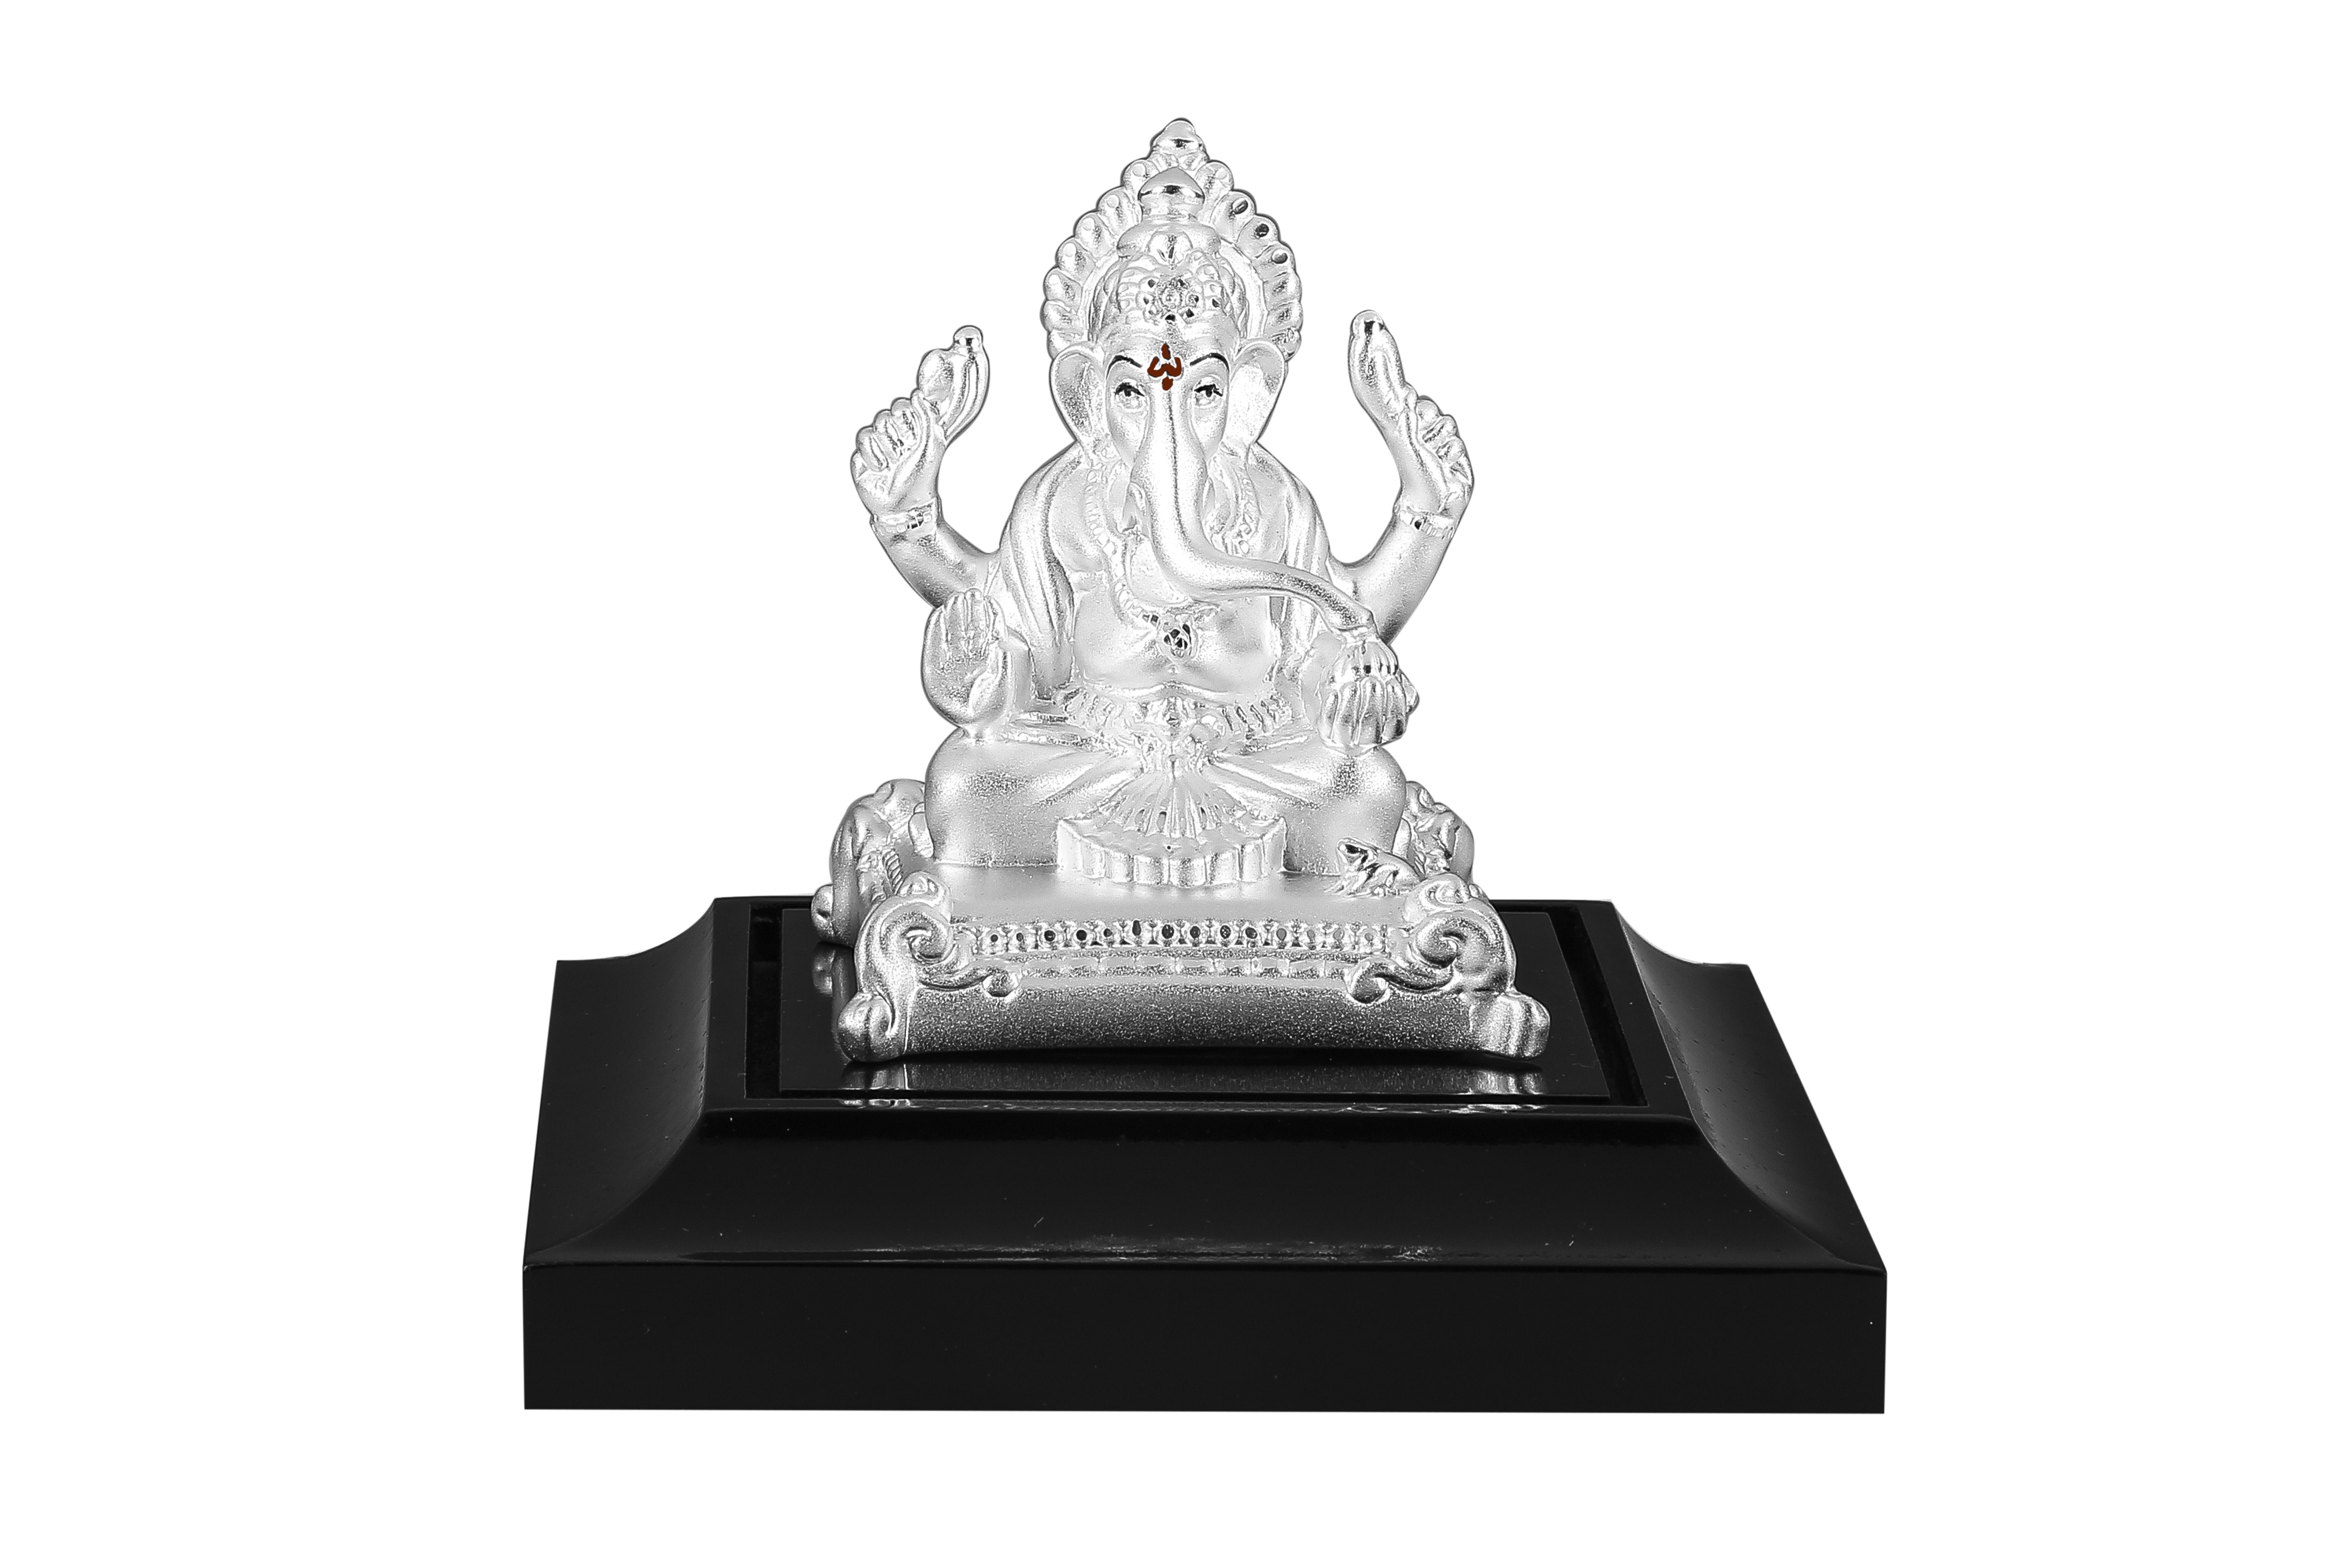 999 Pure Silver Ganesha Idol By Krysaliis Isvara - Krign_20 Plain Idols